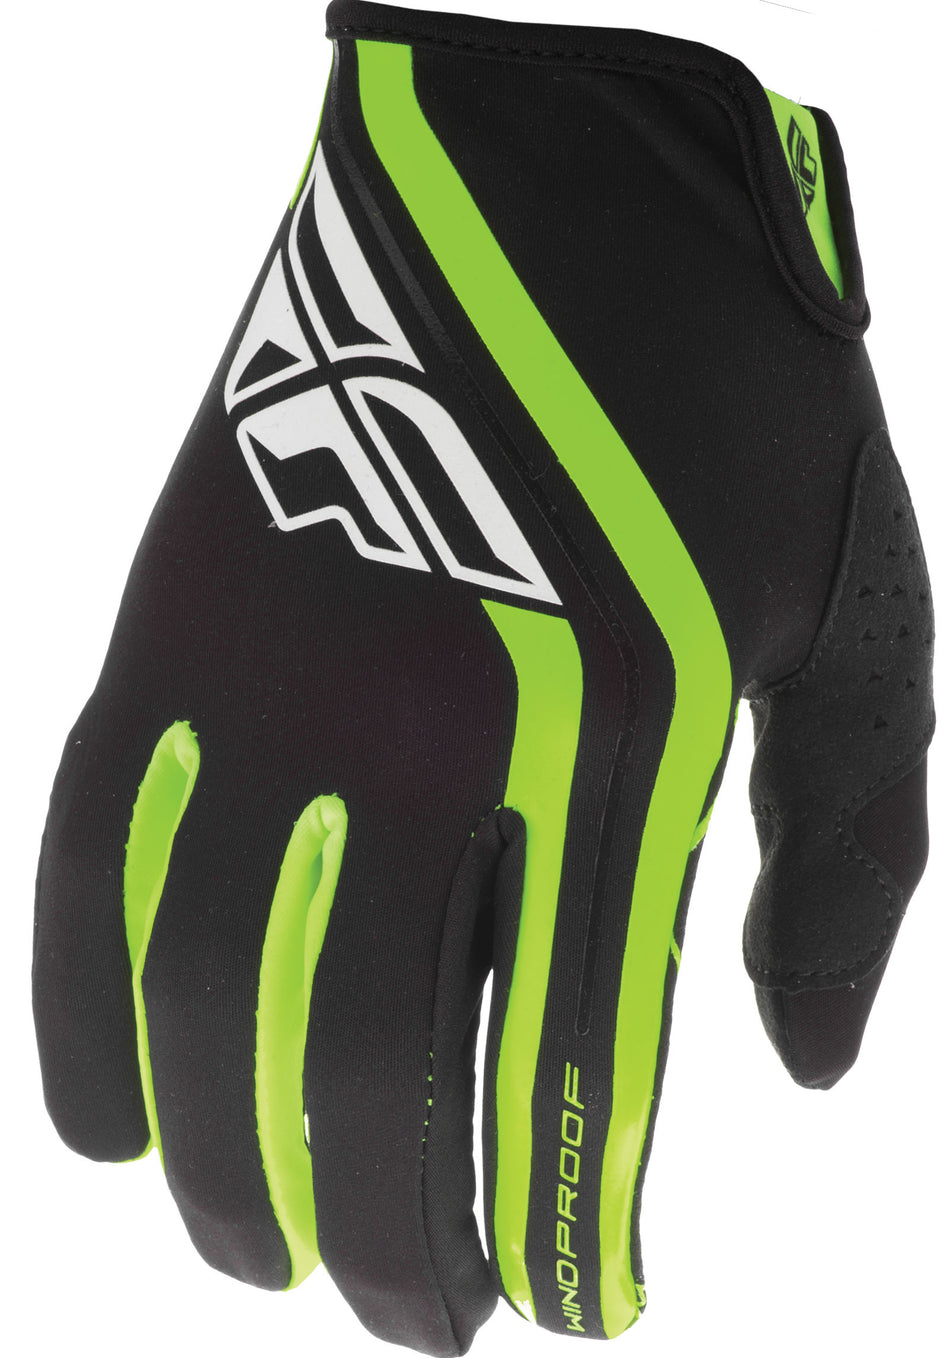 FLY RACING Windproof Gloves Black/Hi-Vis Sz 07 371-14907